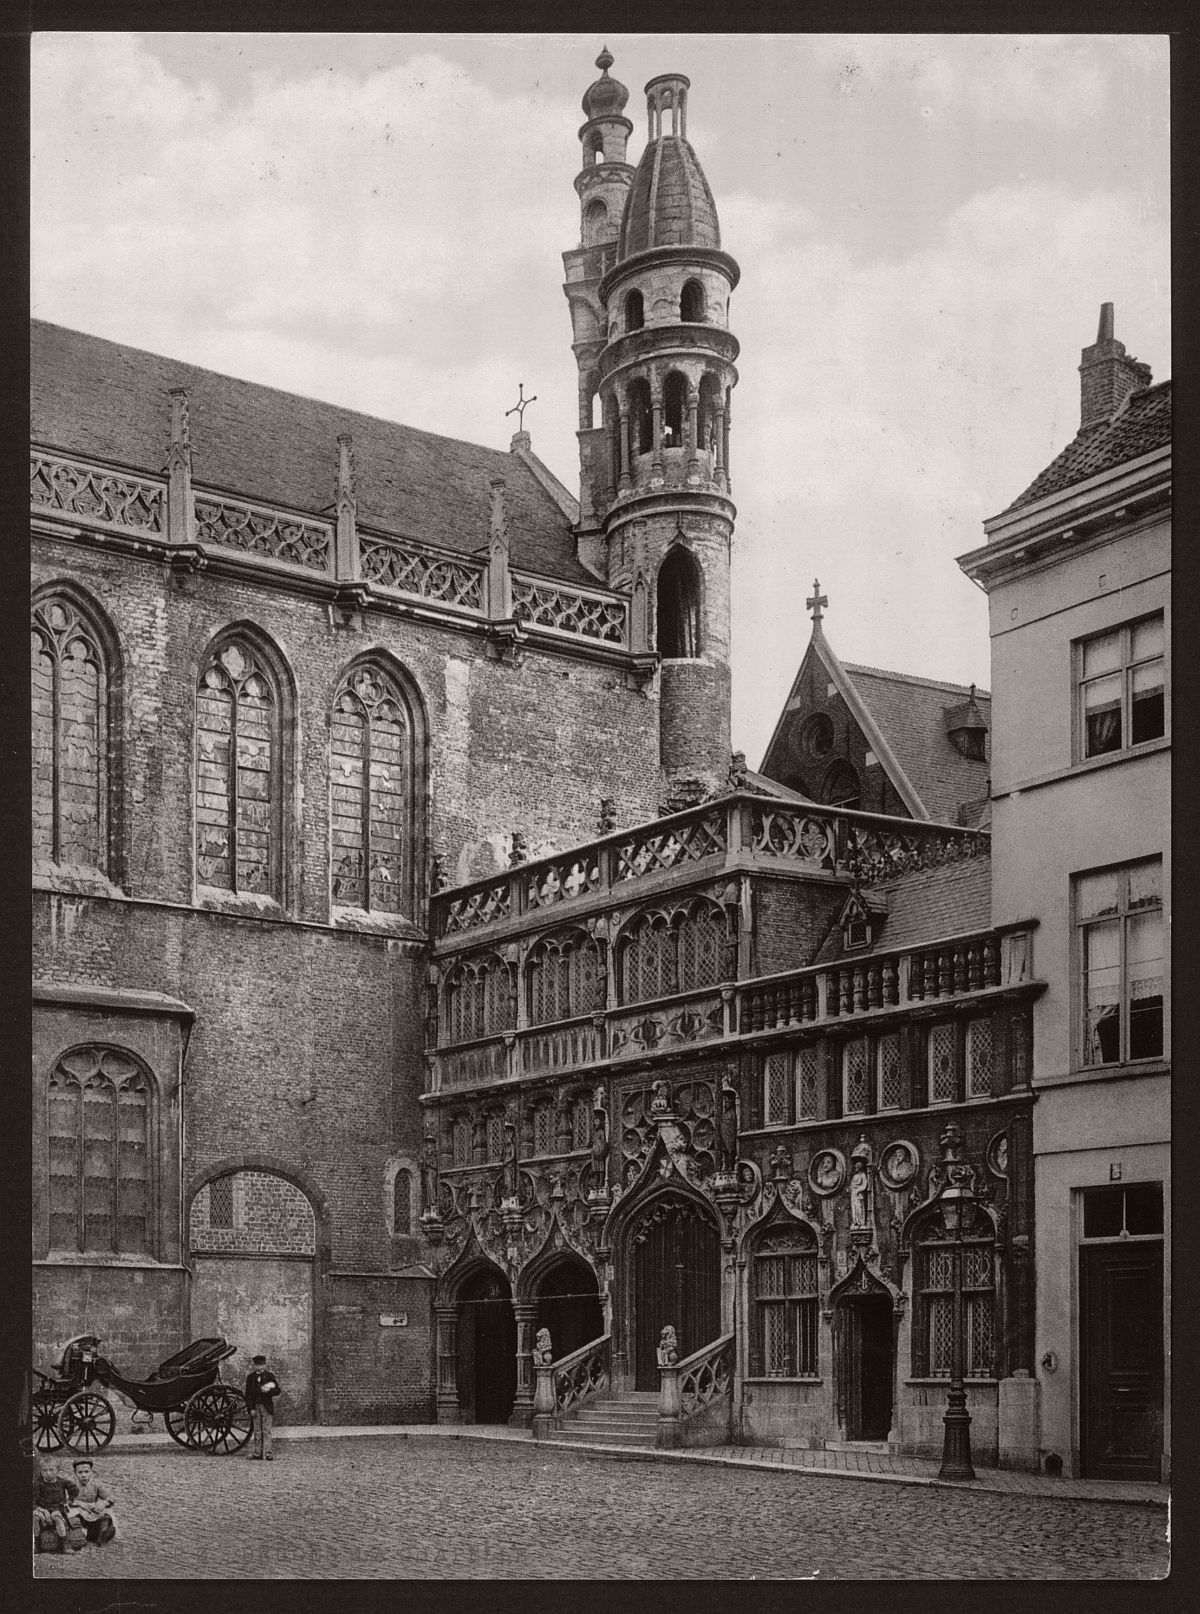 historic-bw-photos-of-bruges-belgium-in-19th-century-13